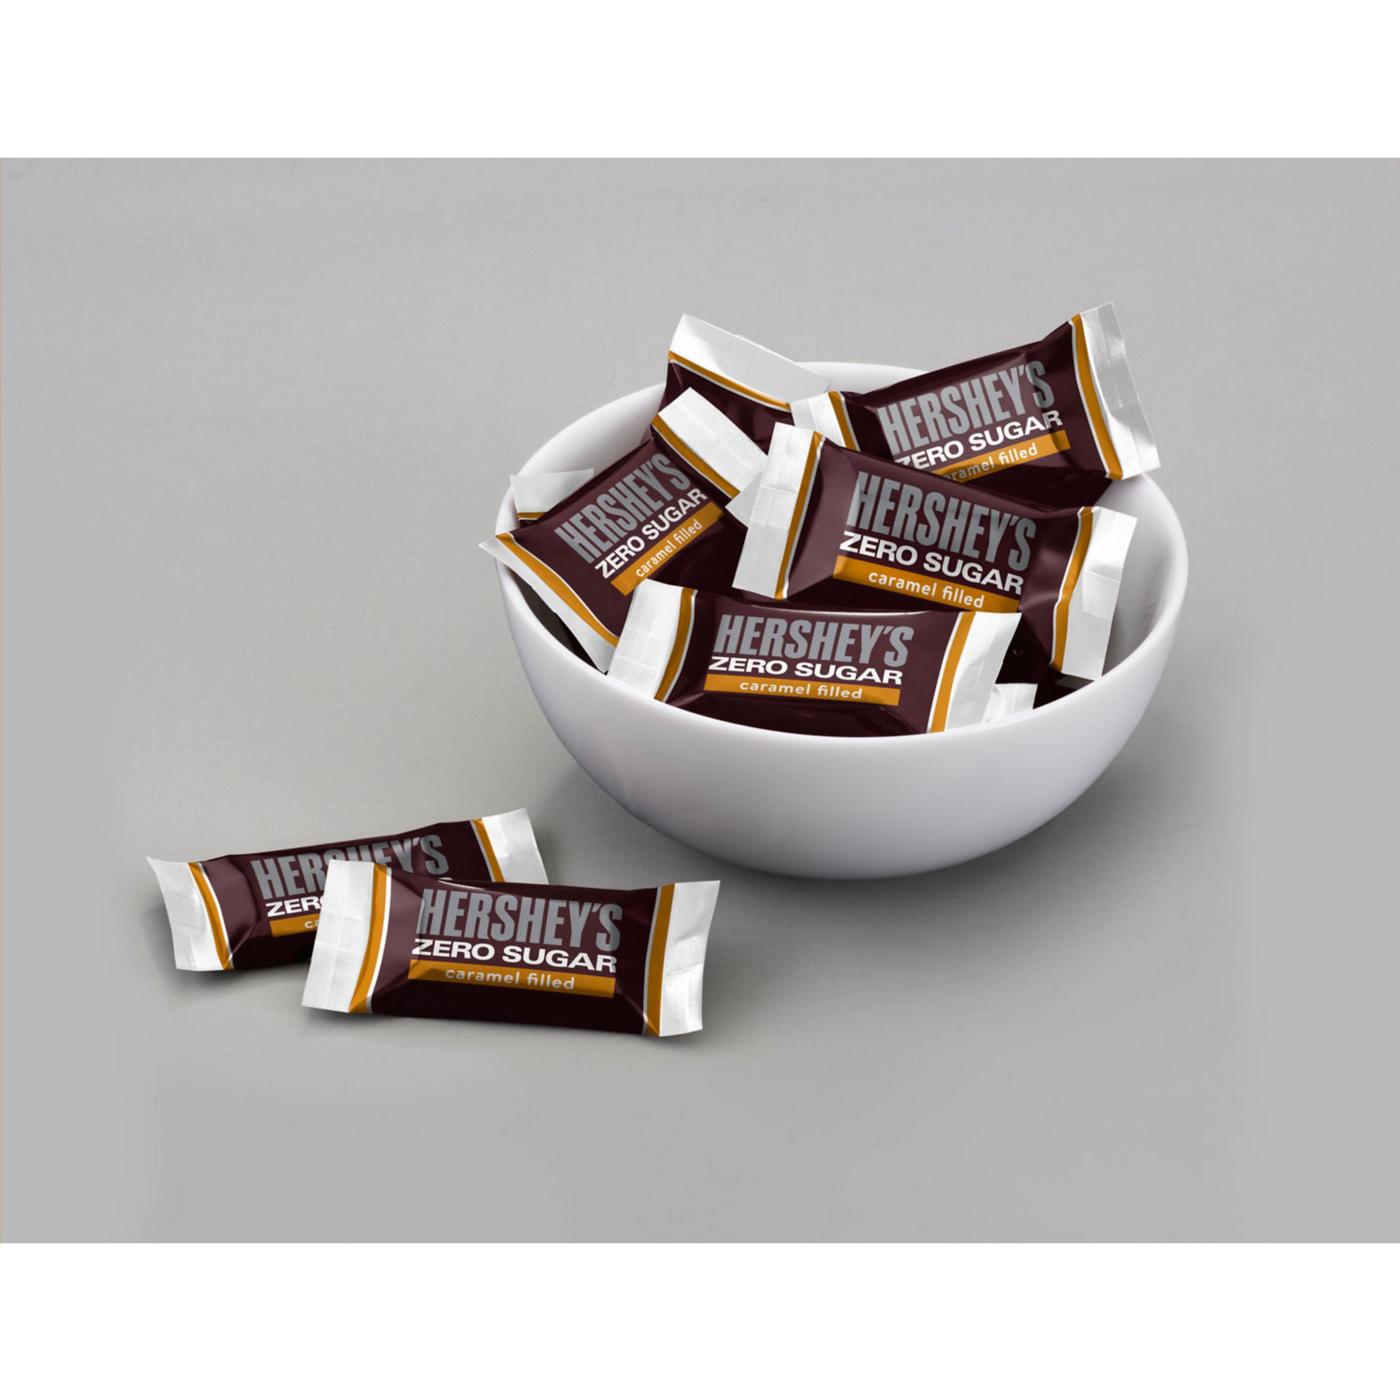 Hershey's Sugar Free Caramel Filled Chocolates; image 7 of 7